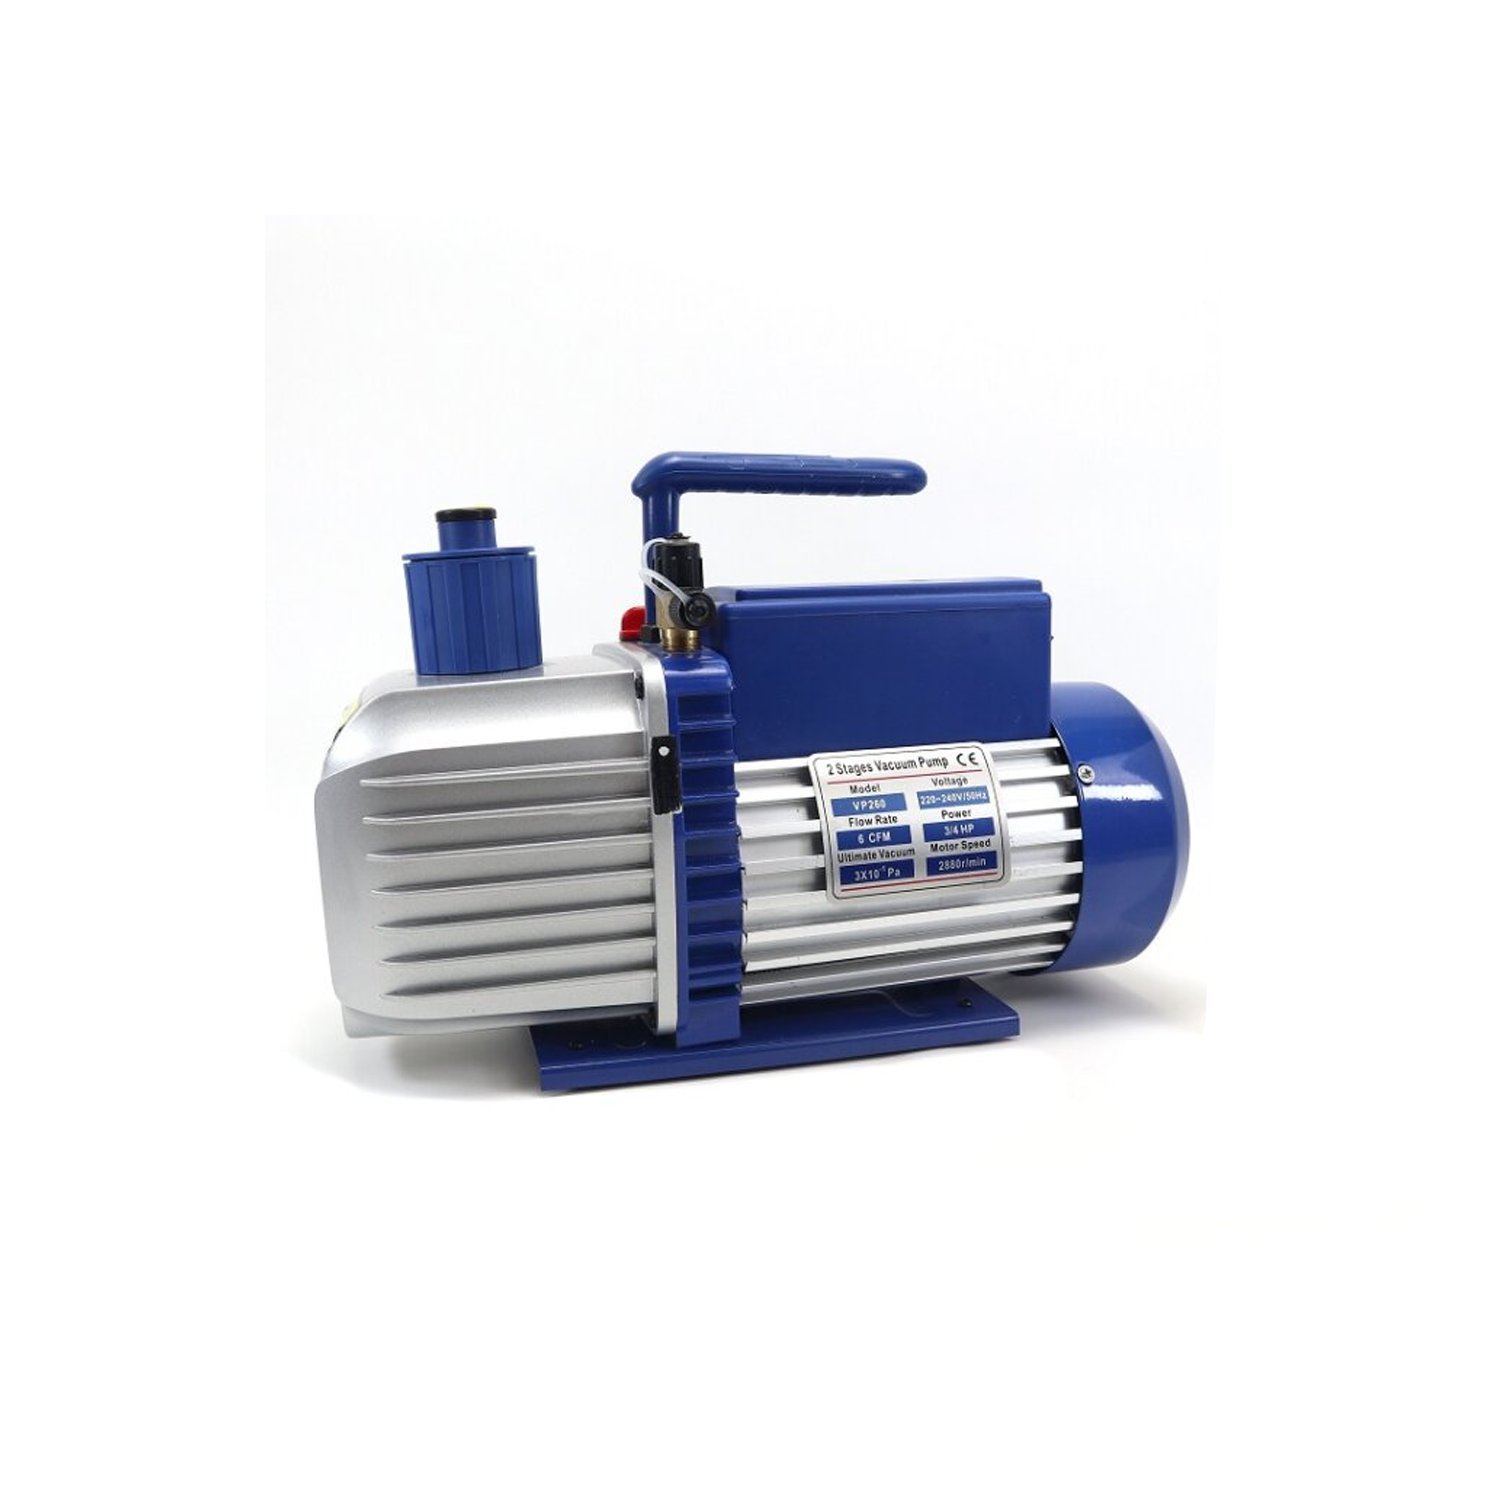 Vacuum pump double voltage 170/142 lit/min - 2-stage, Mastercool 90066-2V-220SVB